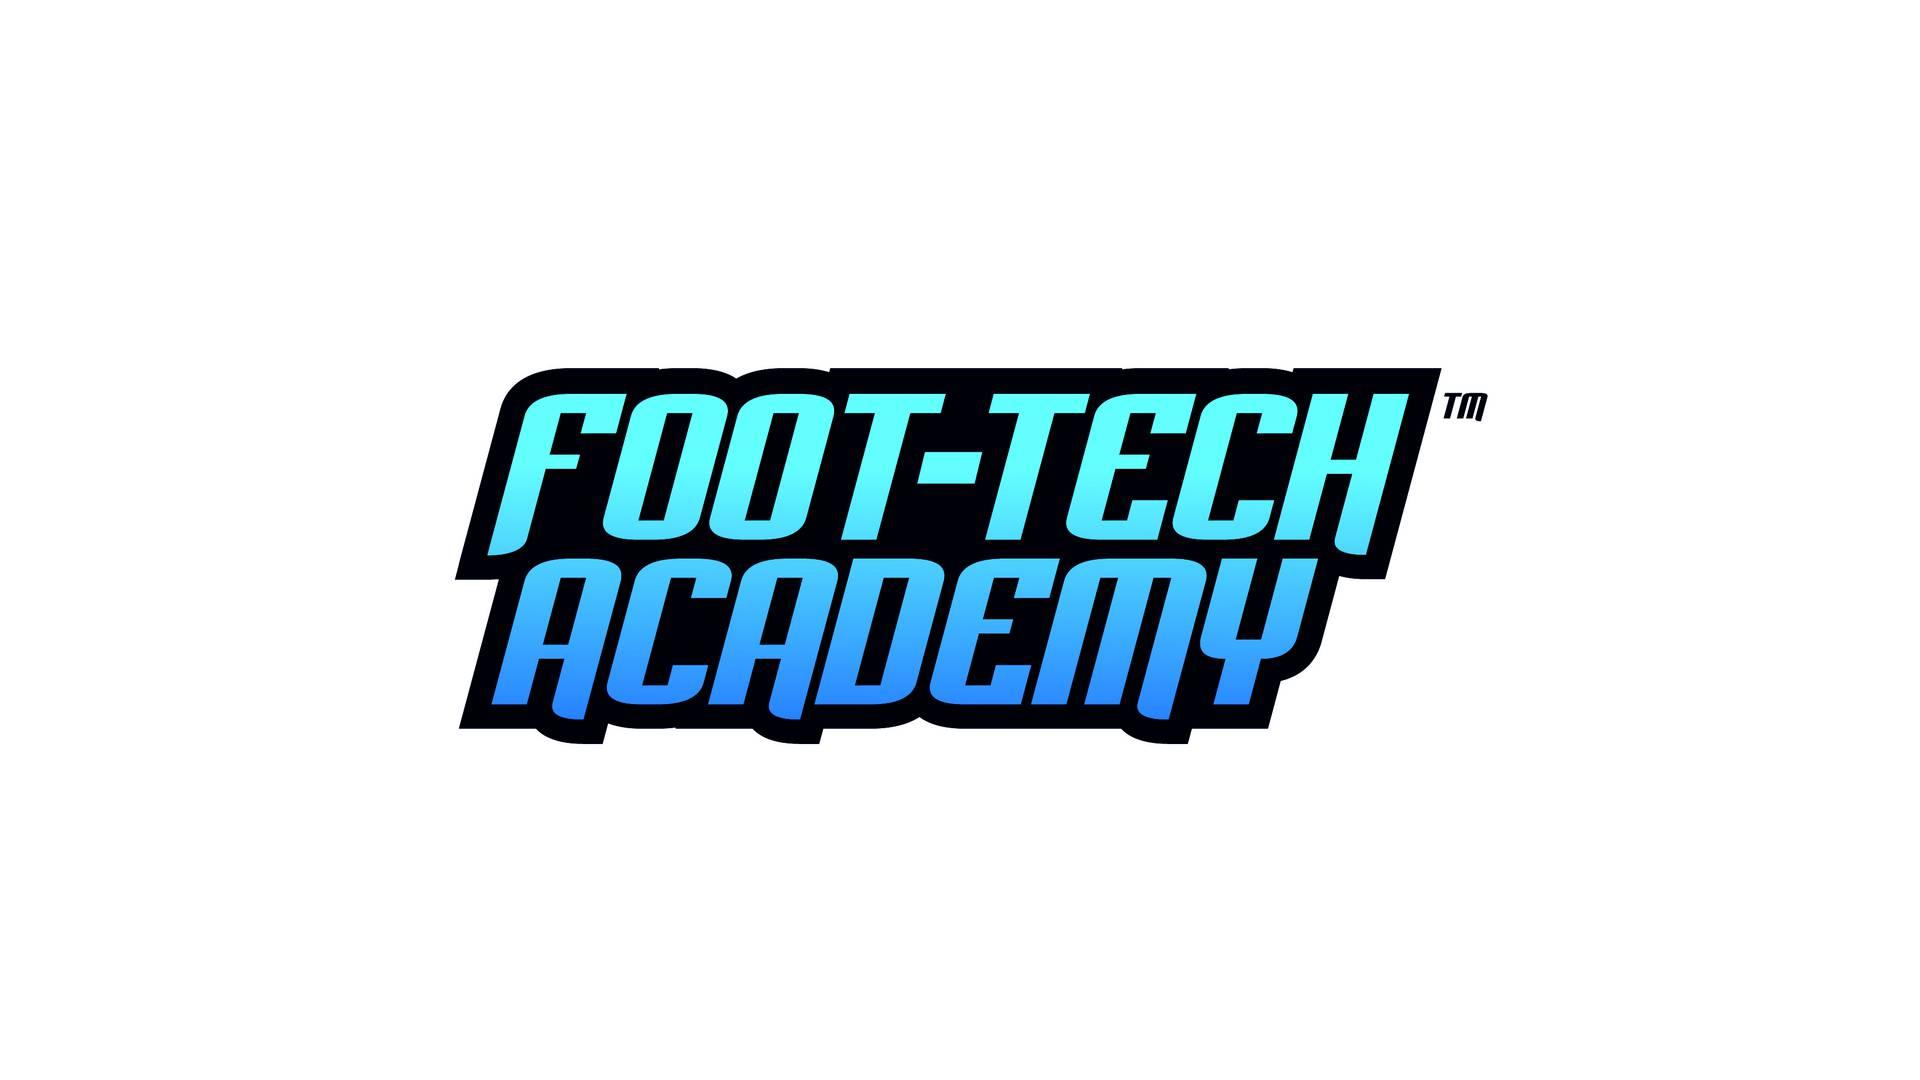 Foot-Tech Academy photo